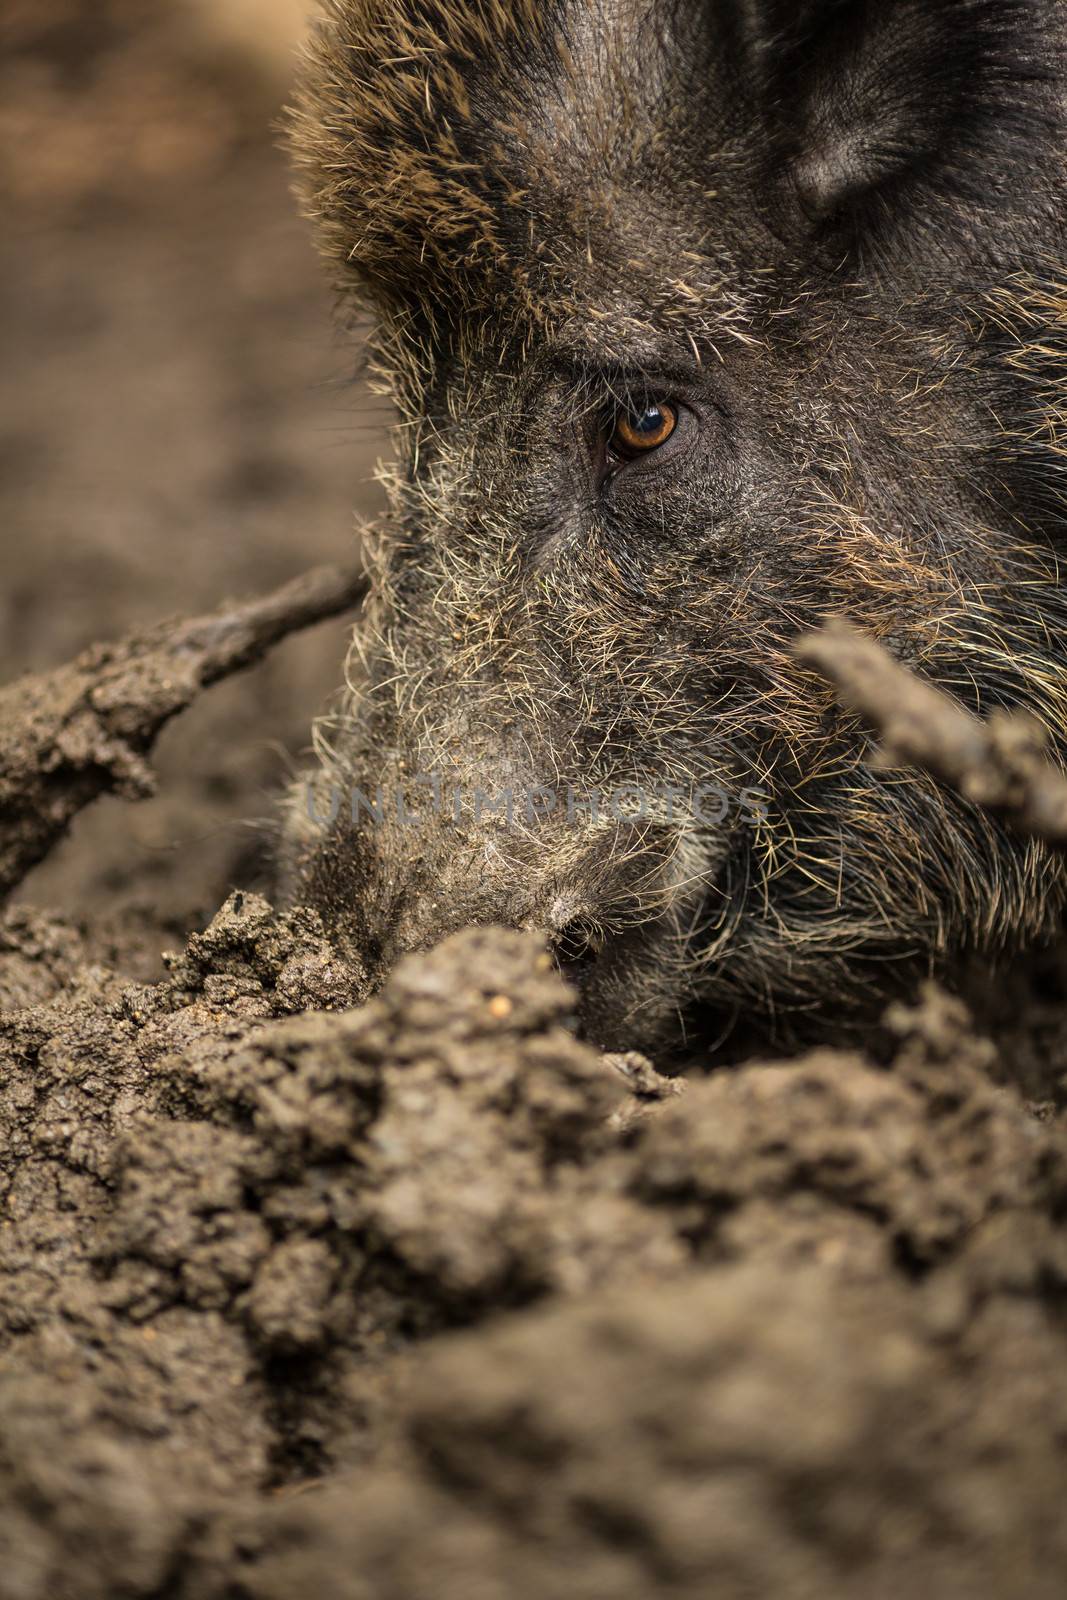 Wild boar (Sus scrofa) by viktor_cap